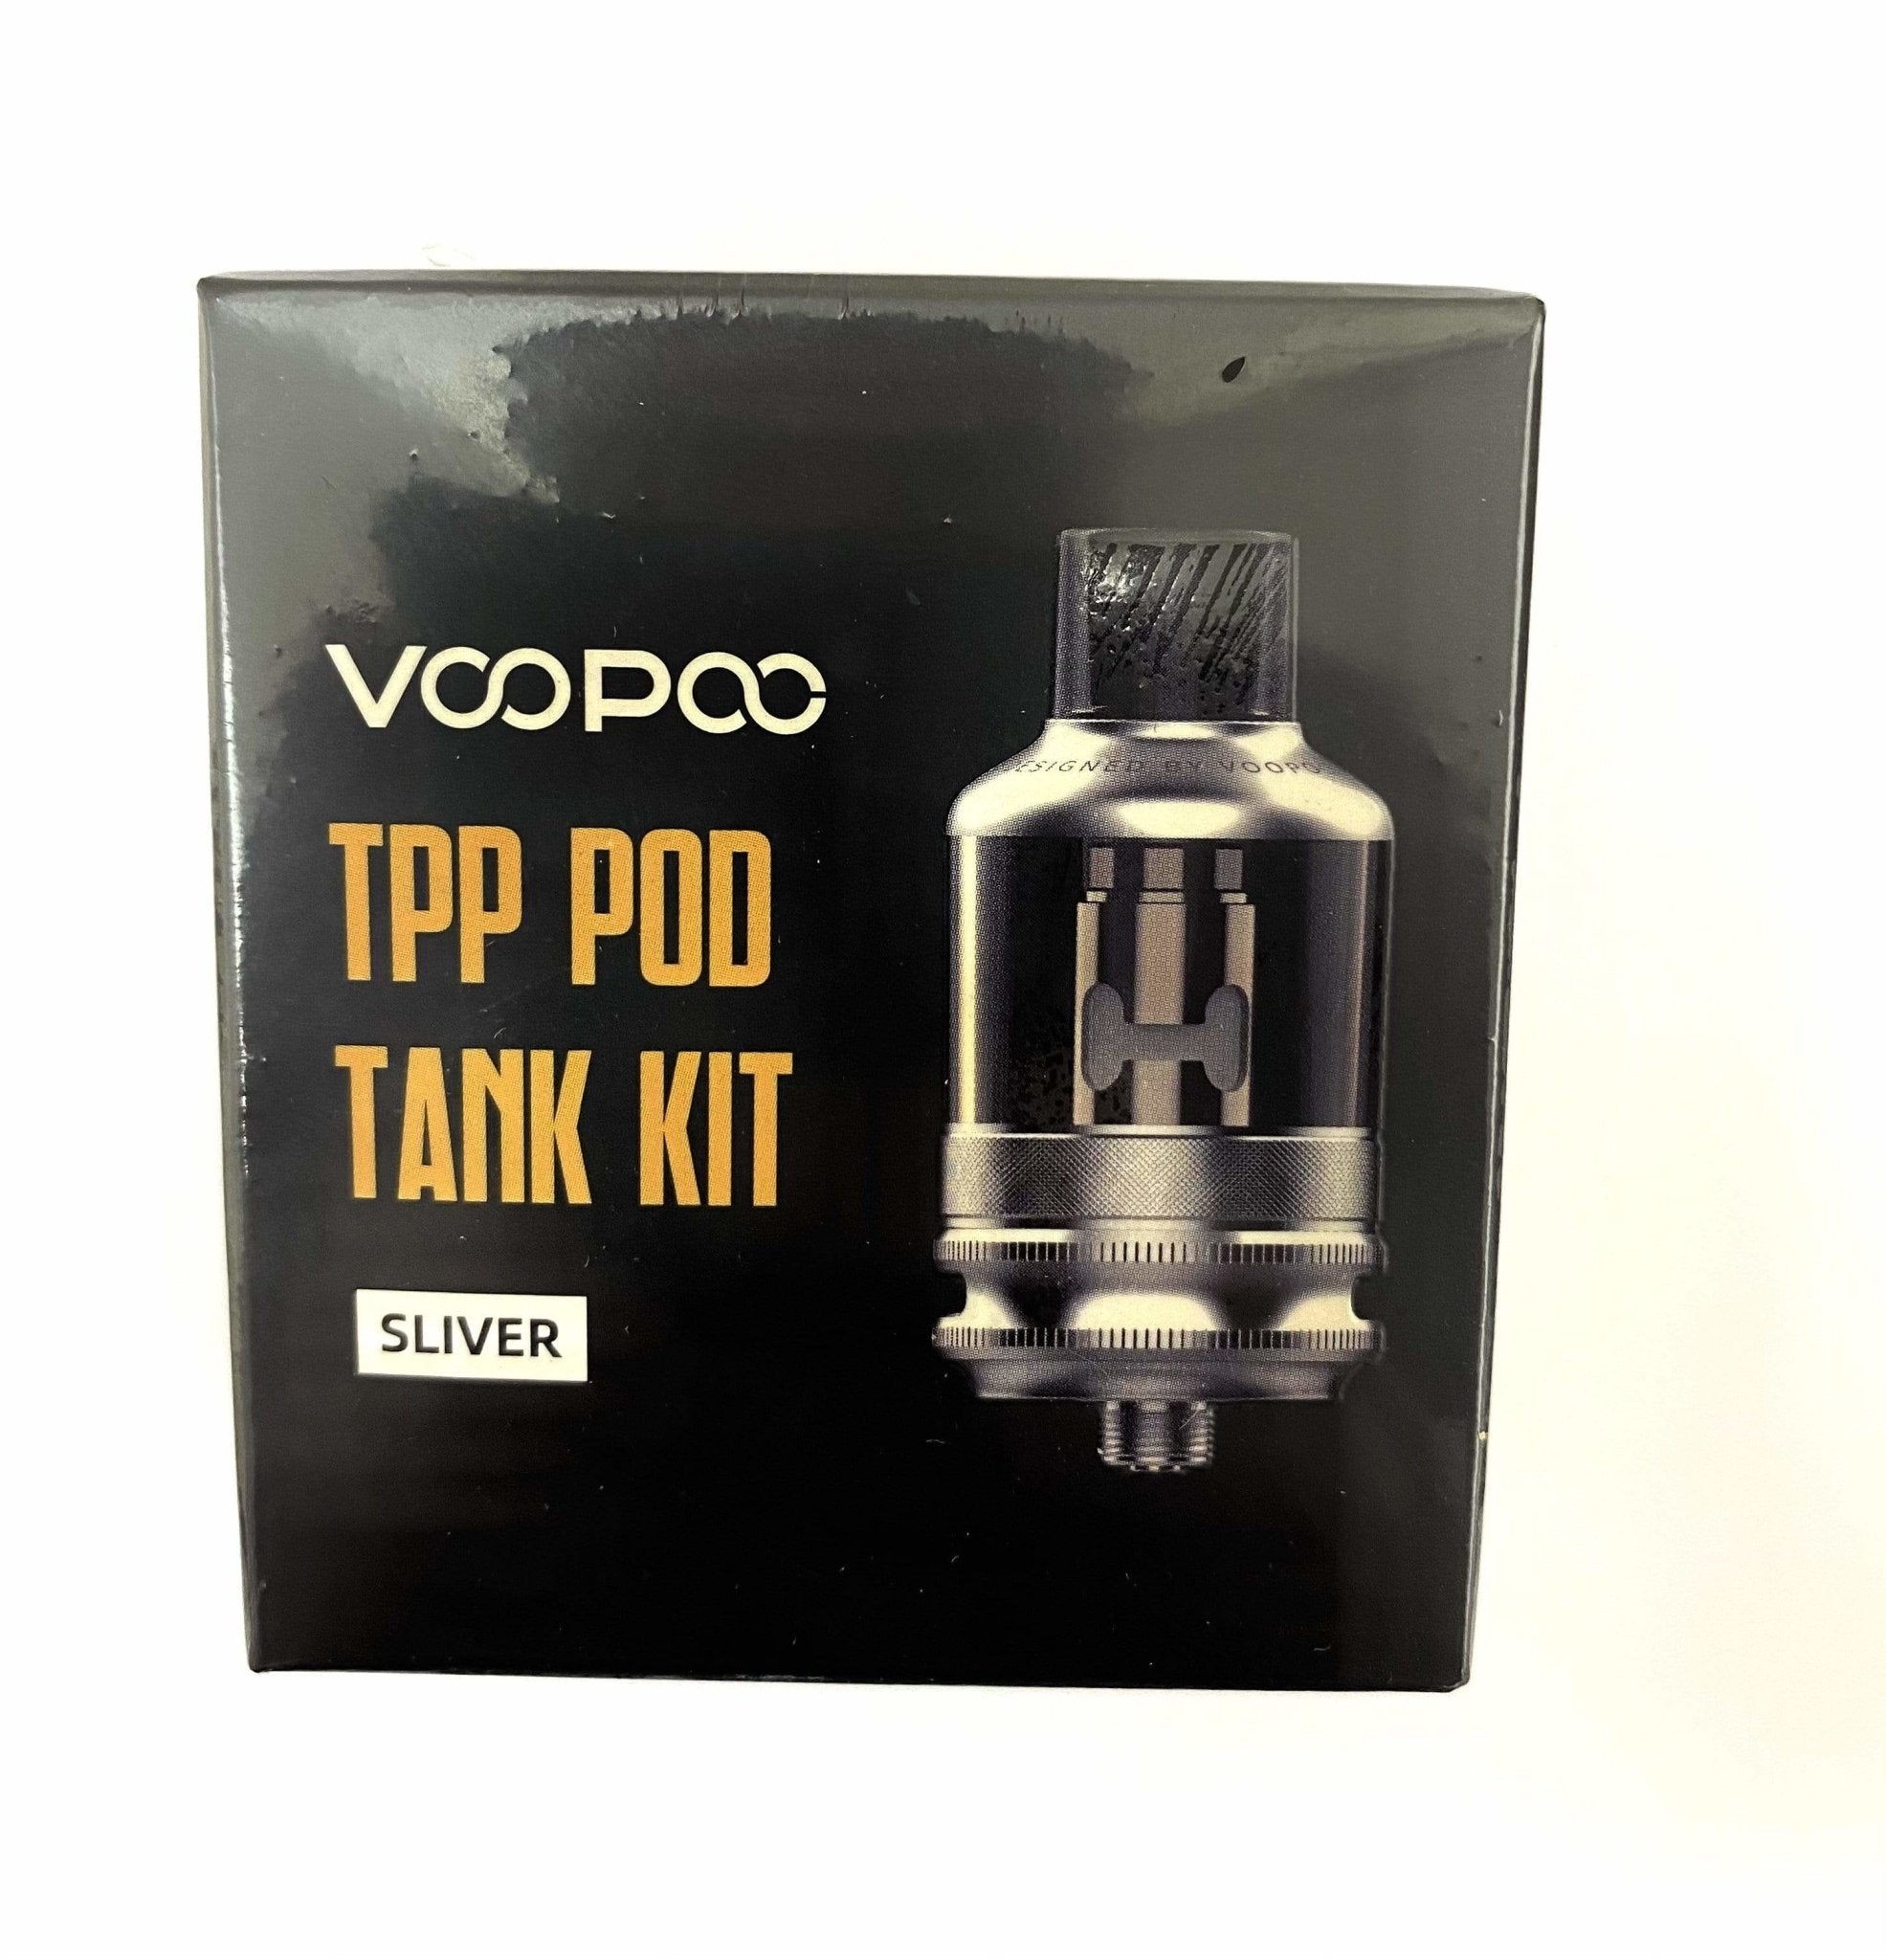 Voopoo TPP Pod Tank - Vaperdeals